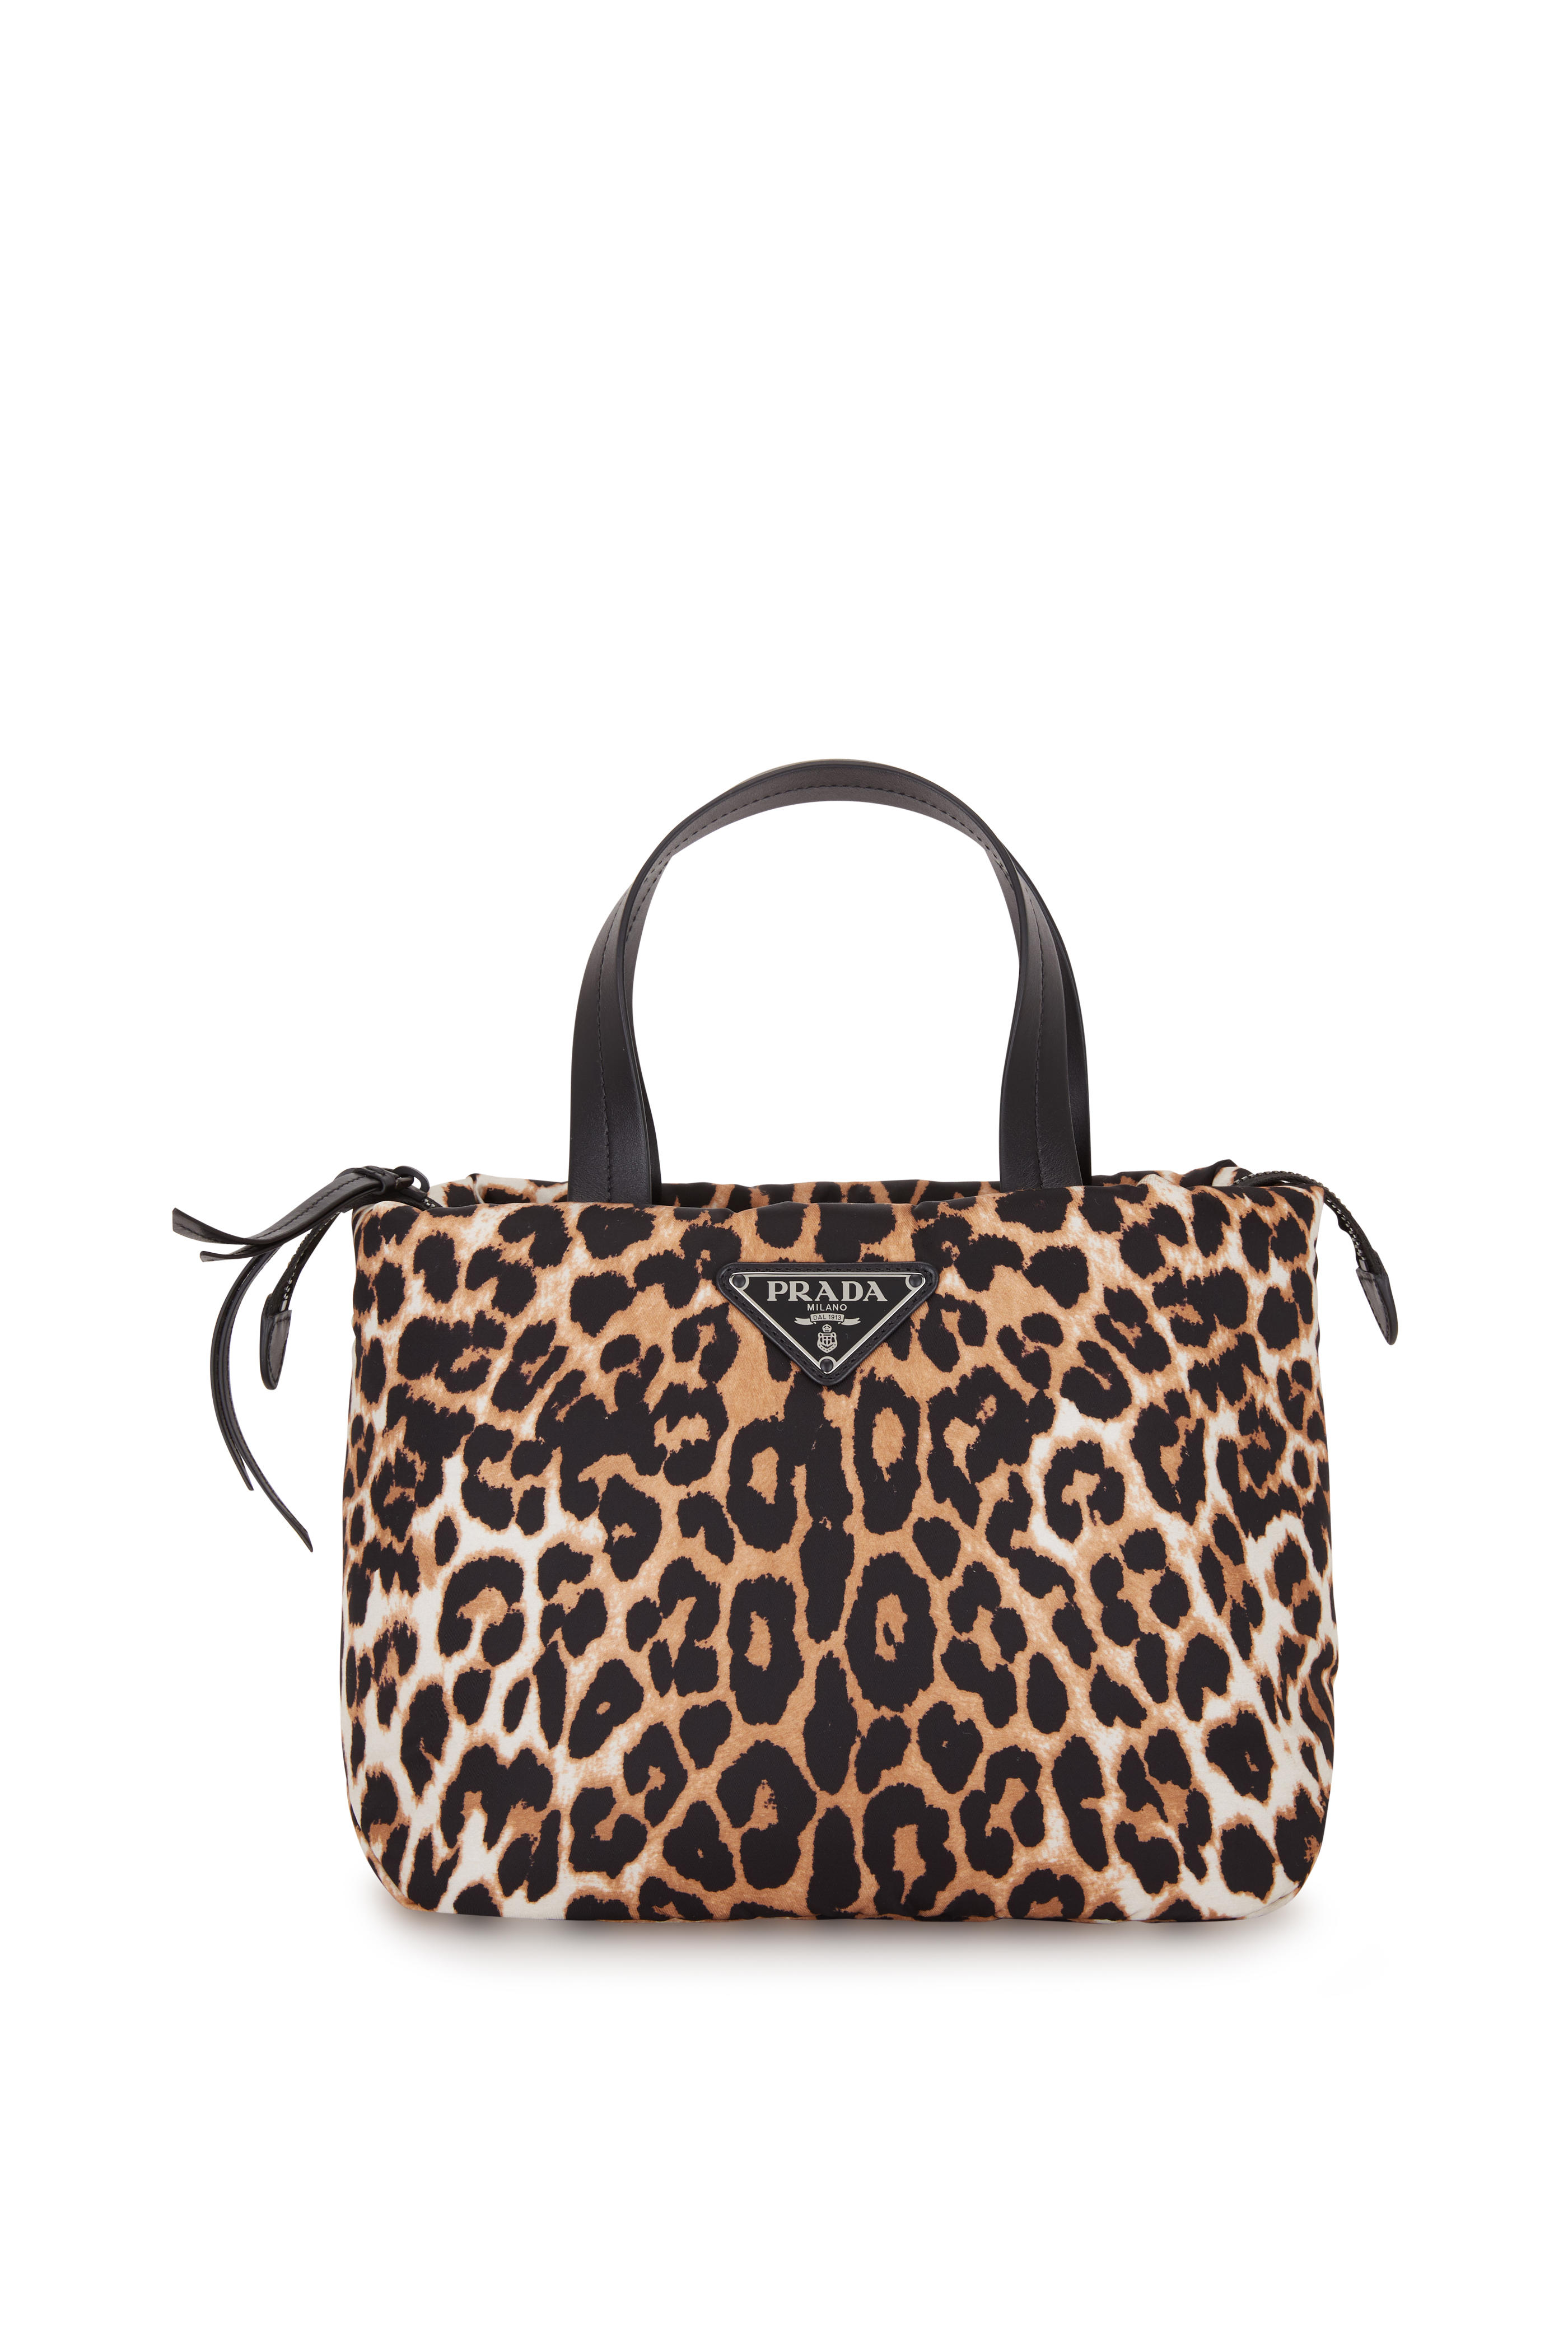 prada leopard handbags